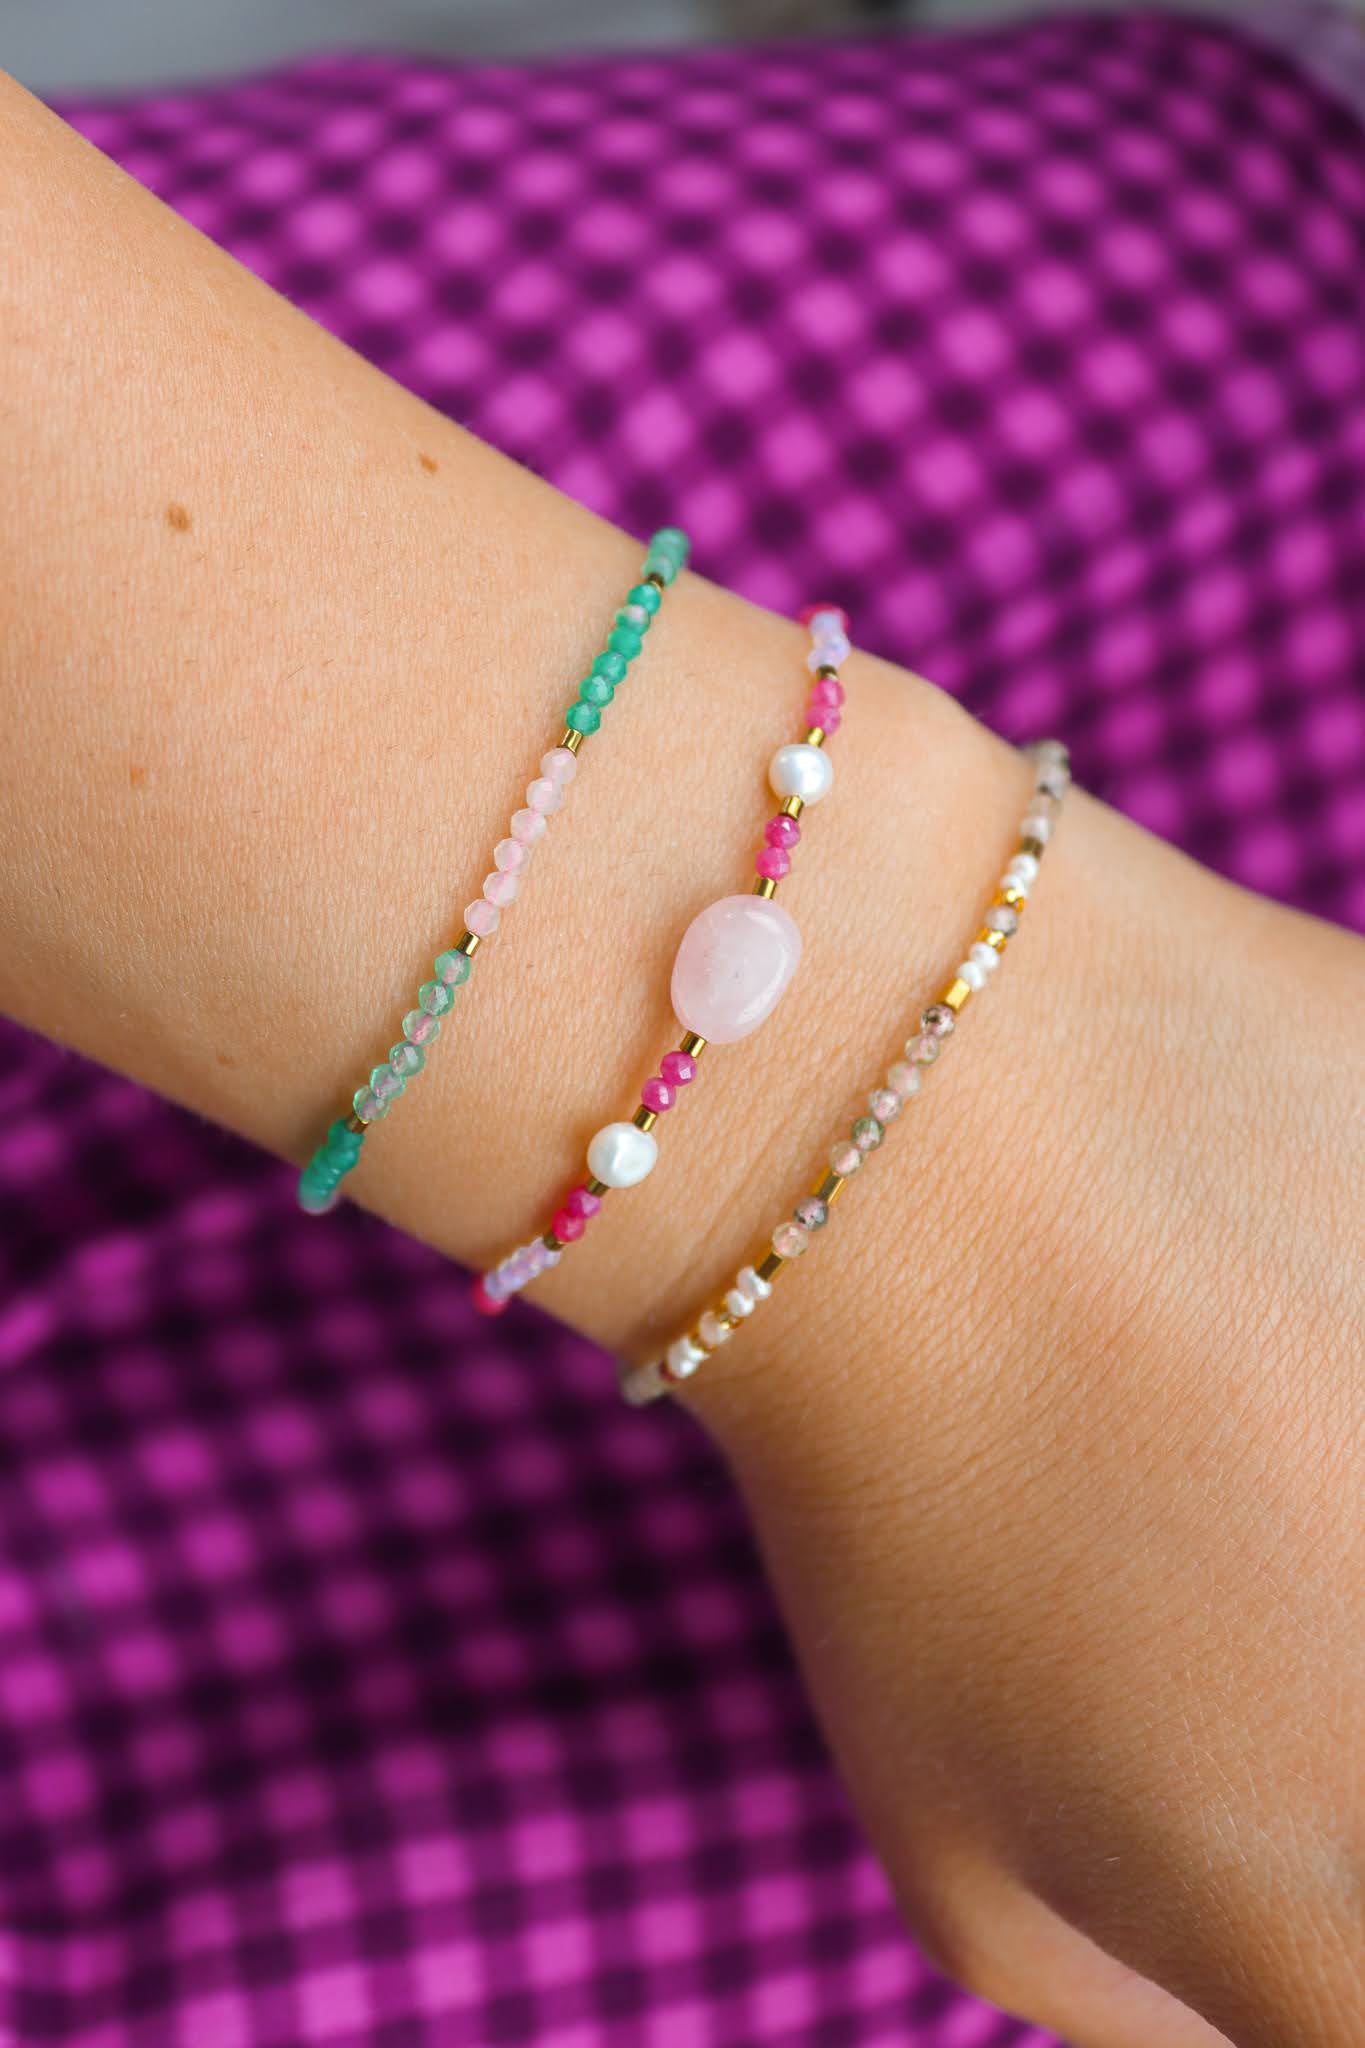 Rose Quartz and watermelon quartz bracelet